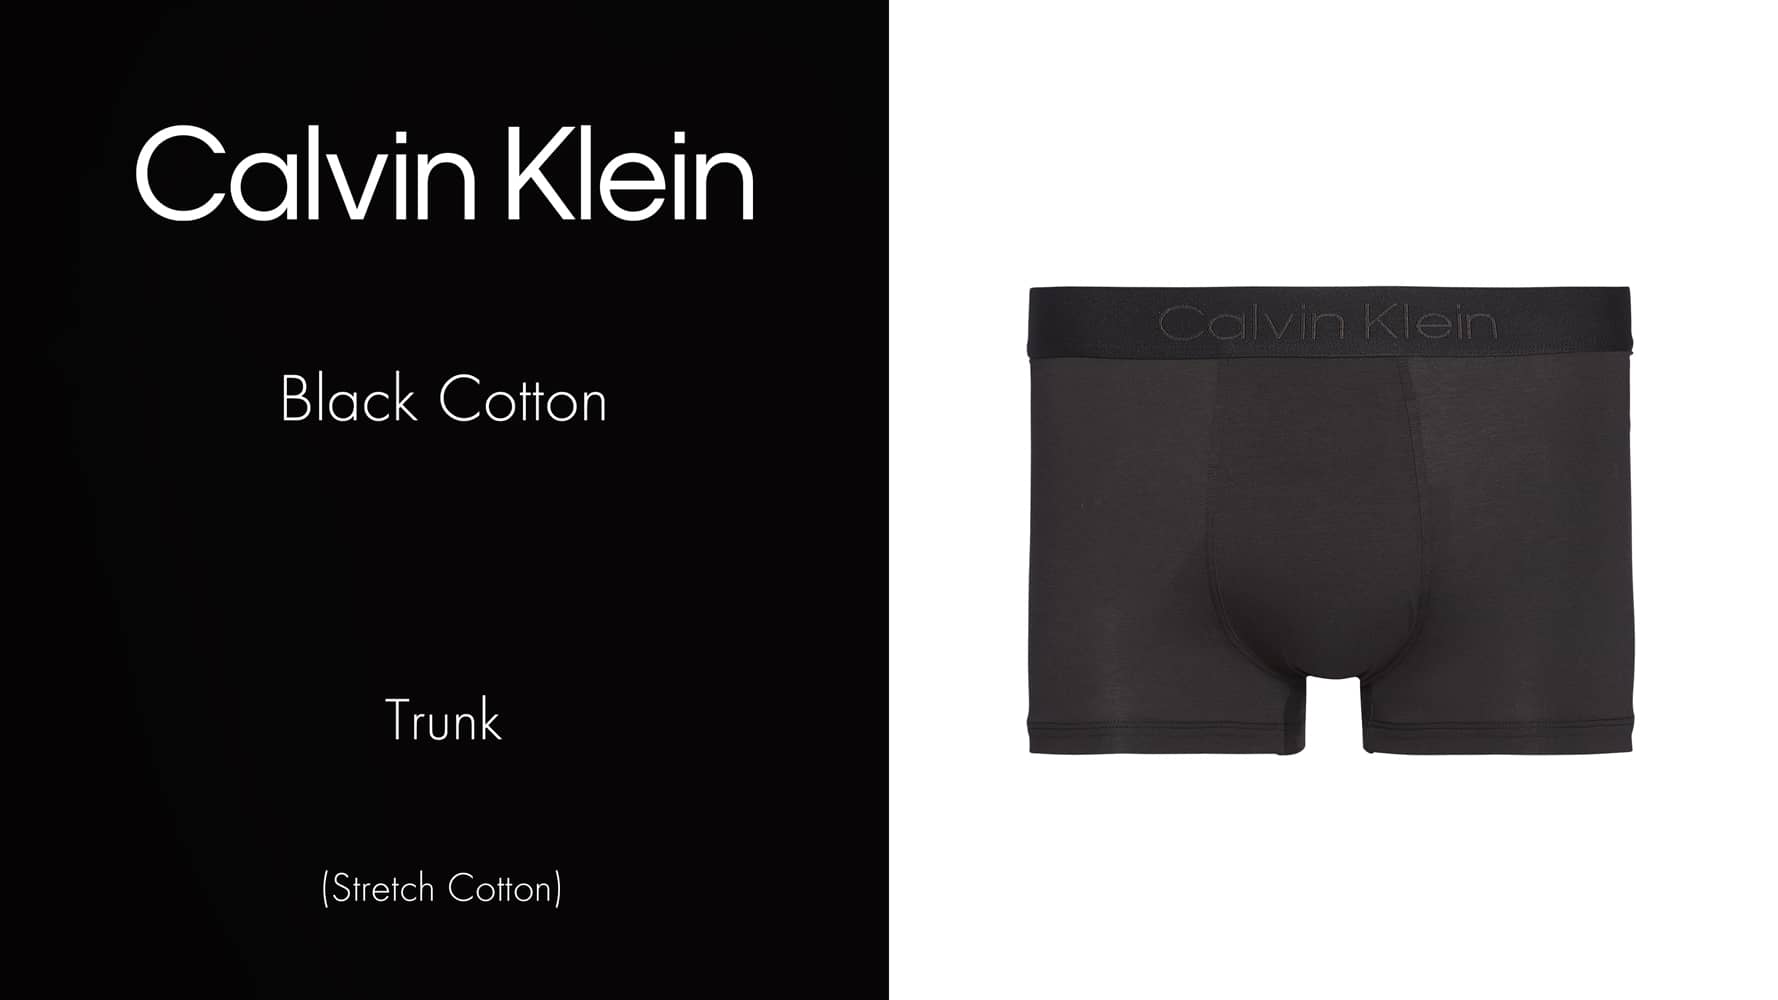 Trunk - CK Black Cotton